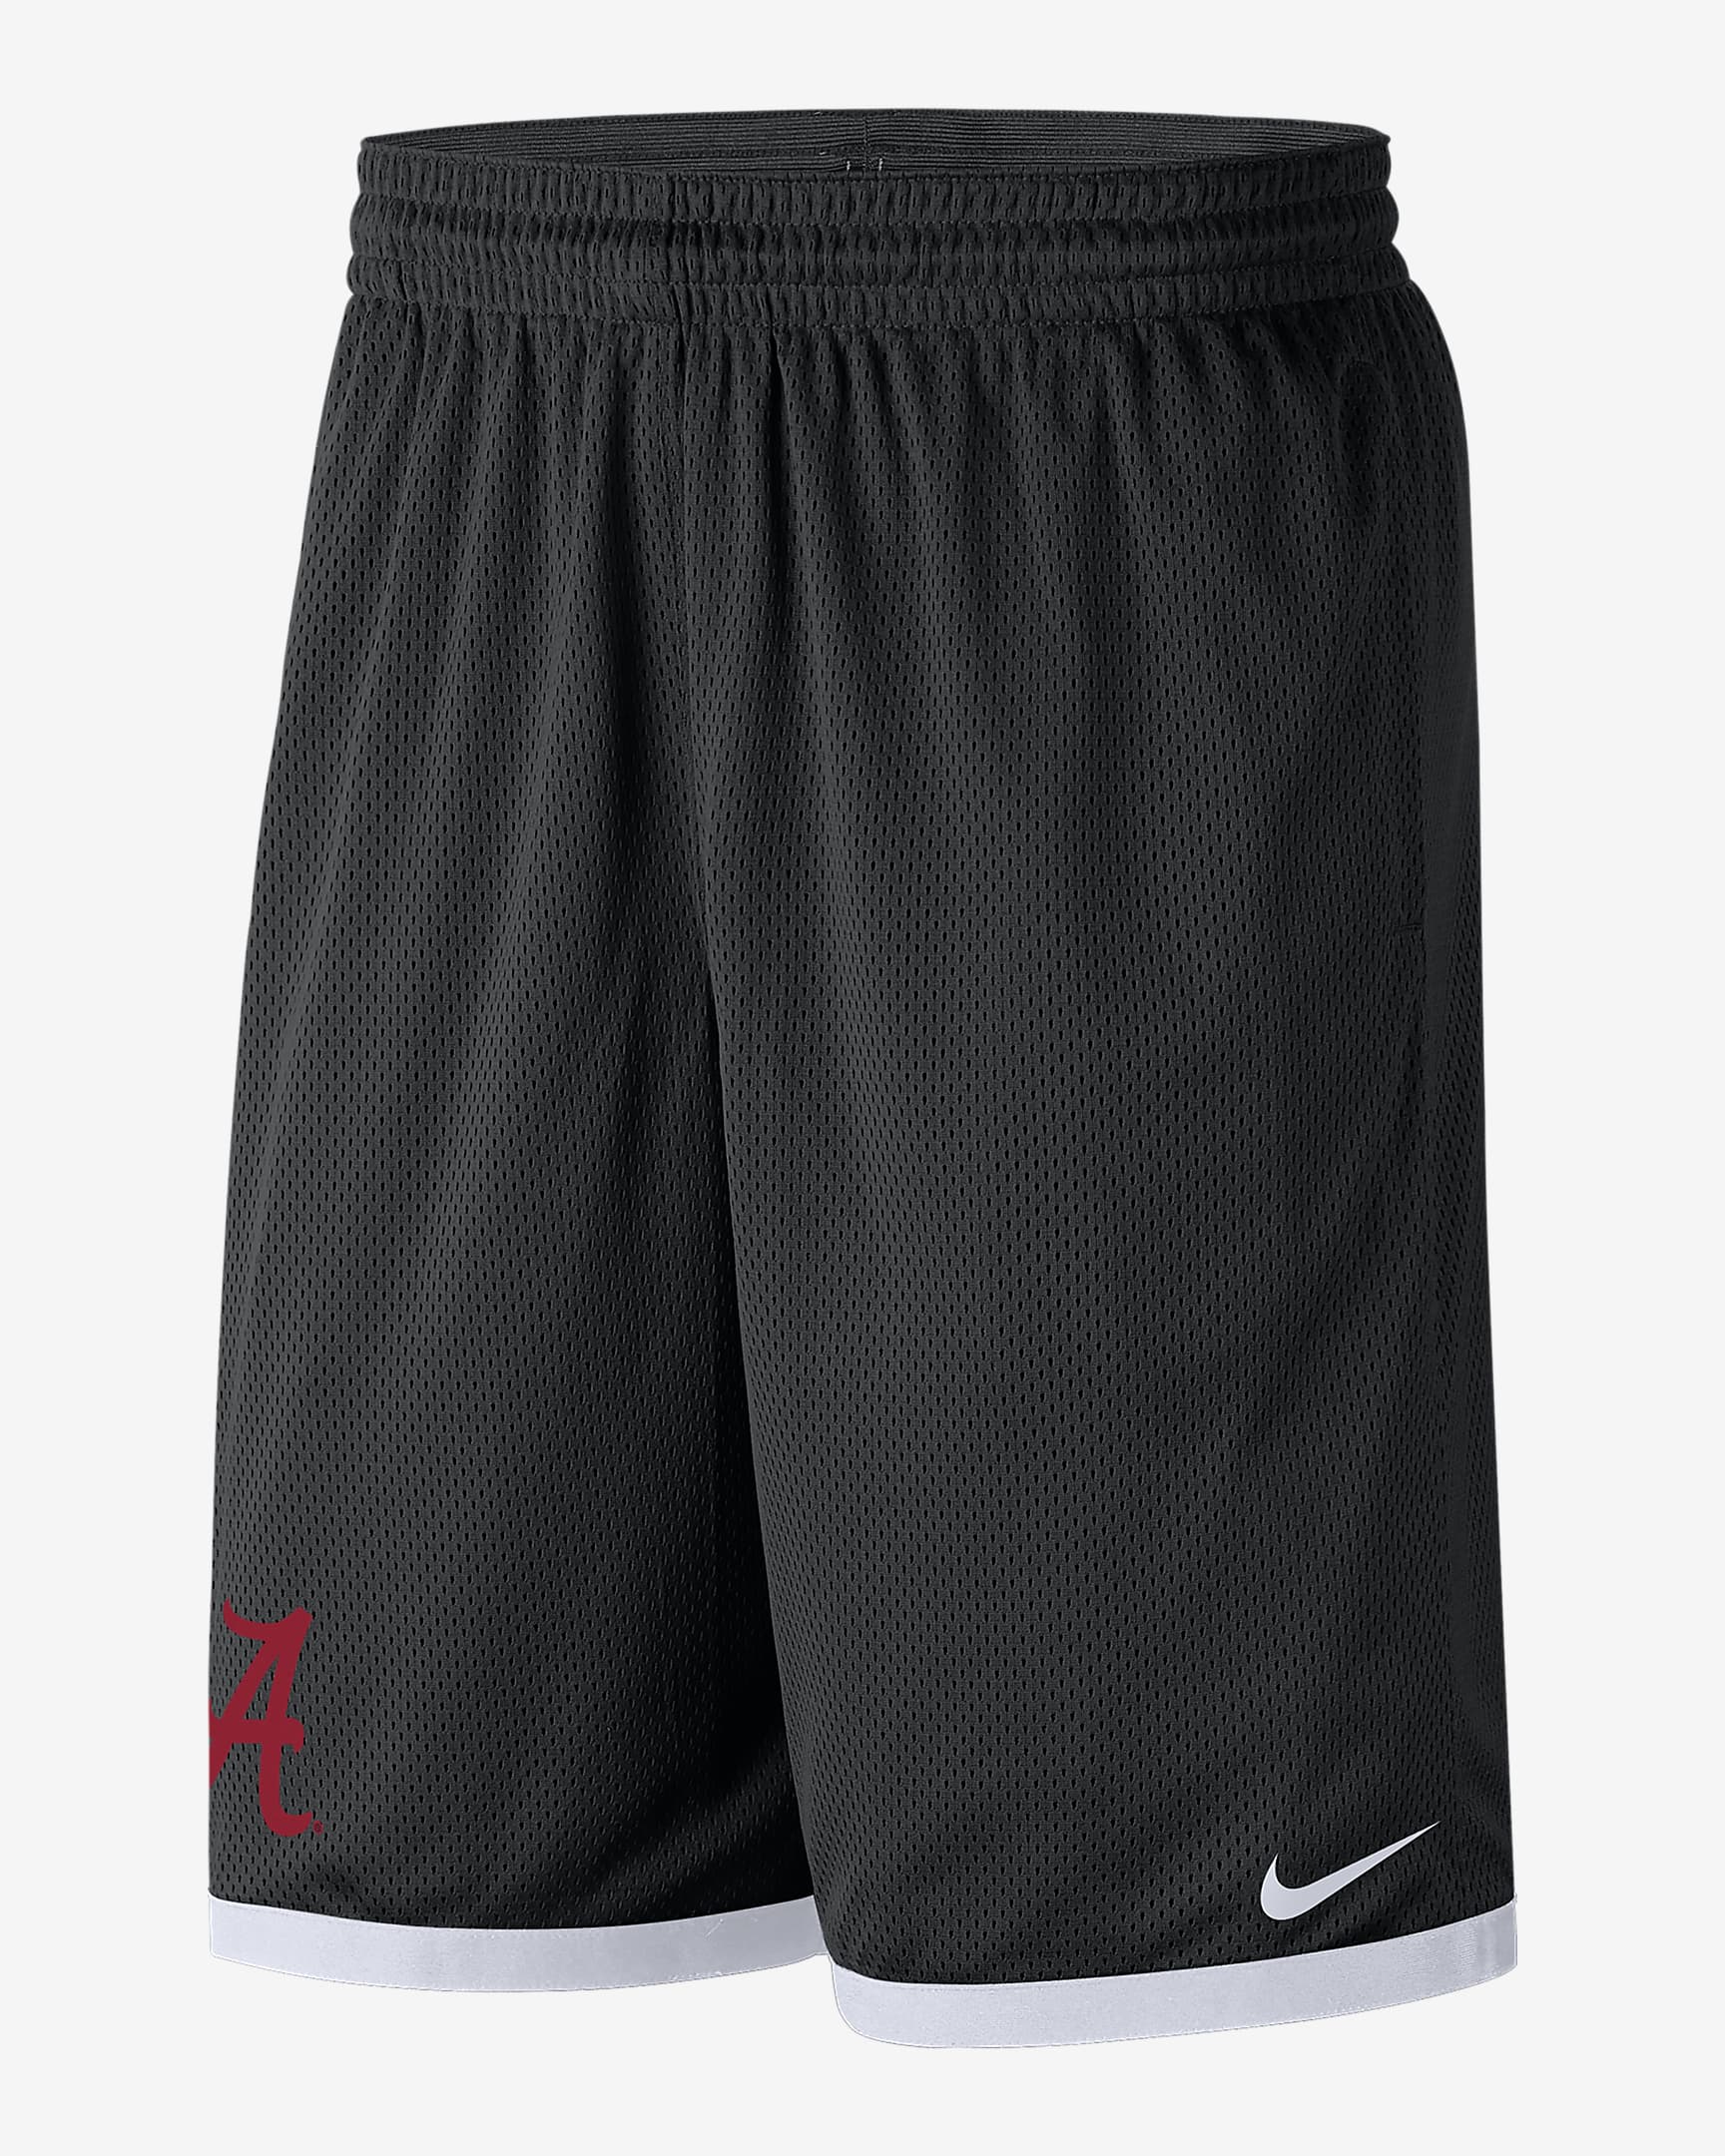 Alabama Men's Nike College Mesh Shorts. Nike.com